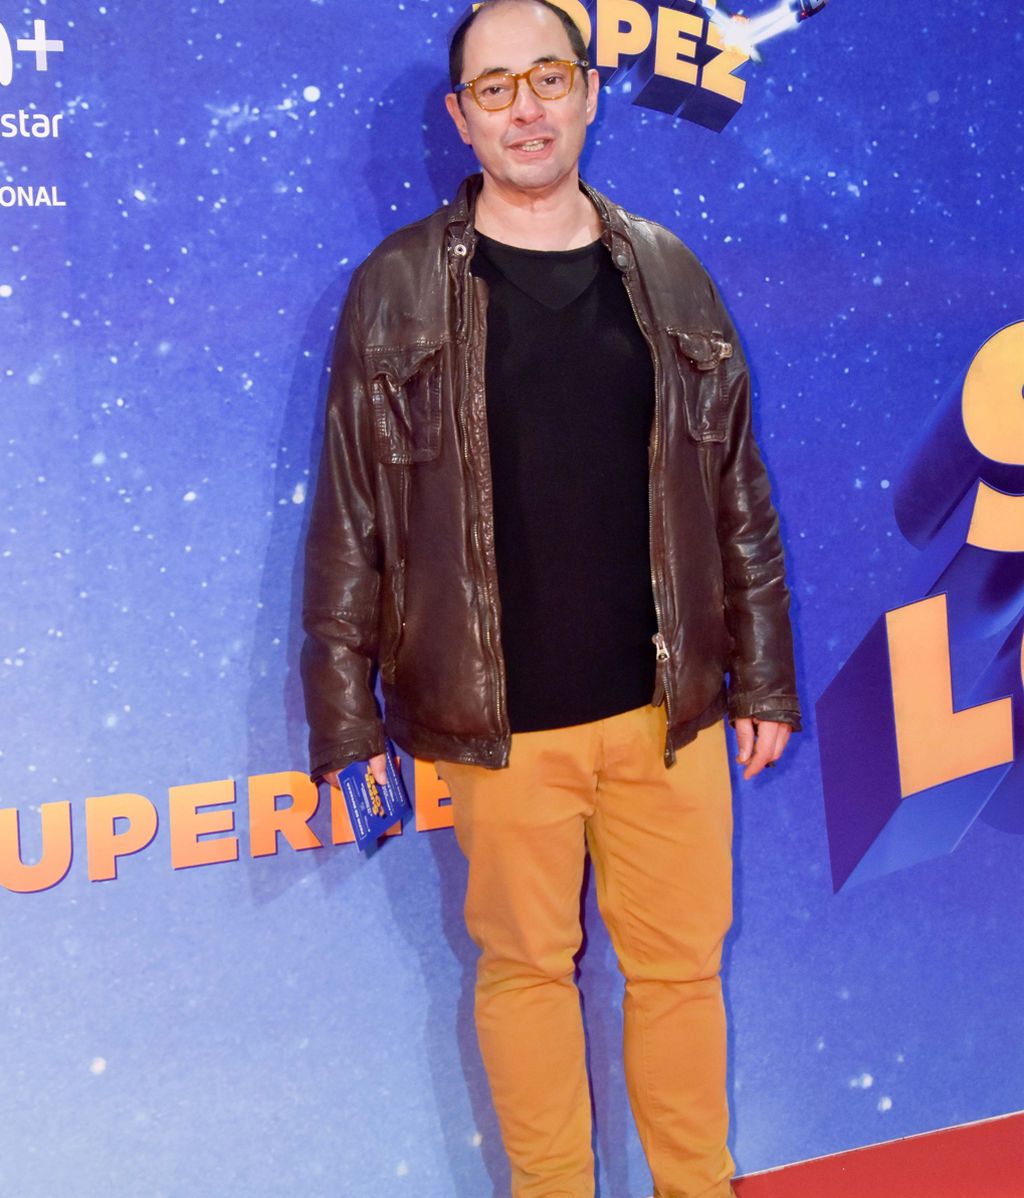 'Superlópez' salta del tebeo al estreno: los vips que acompañaron a Dani Rovira